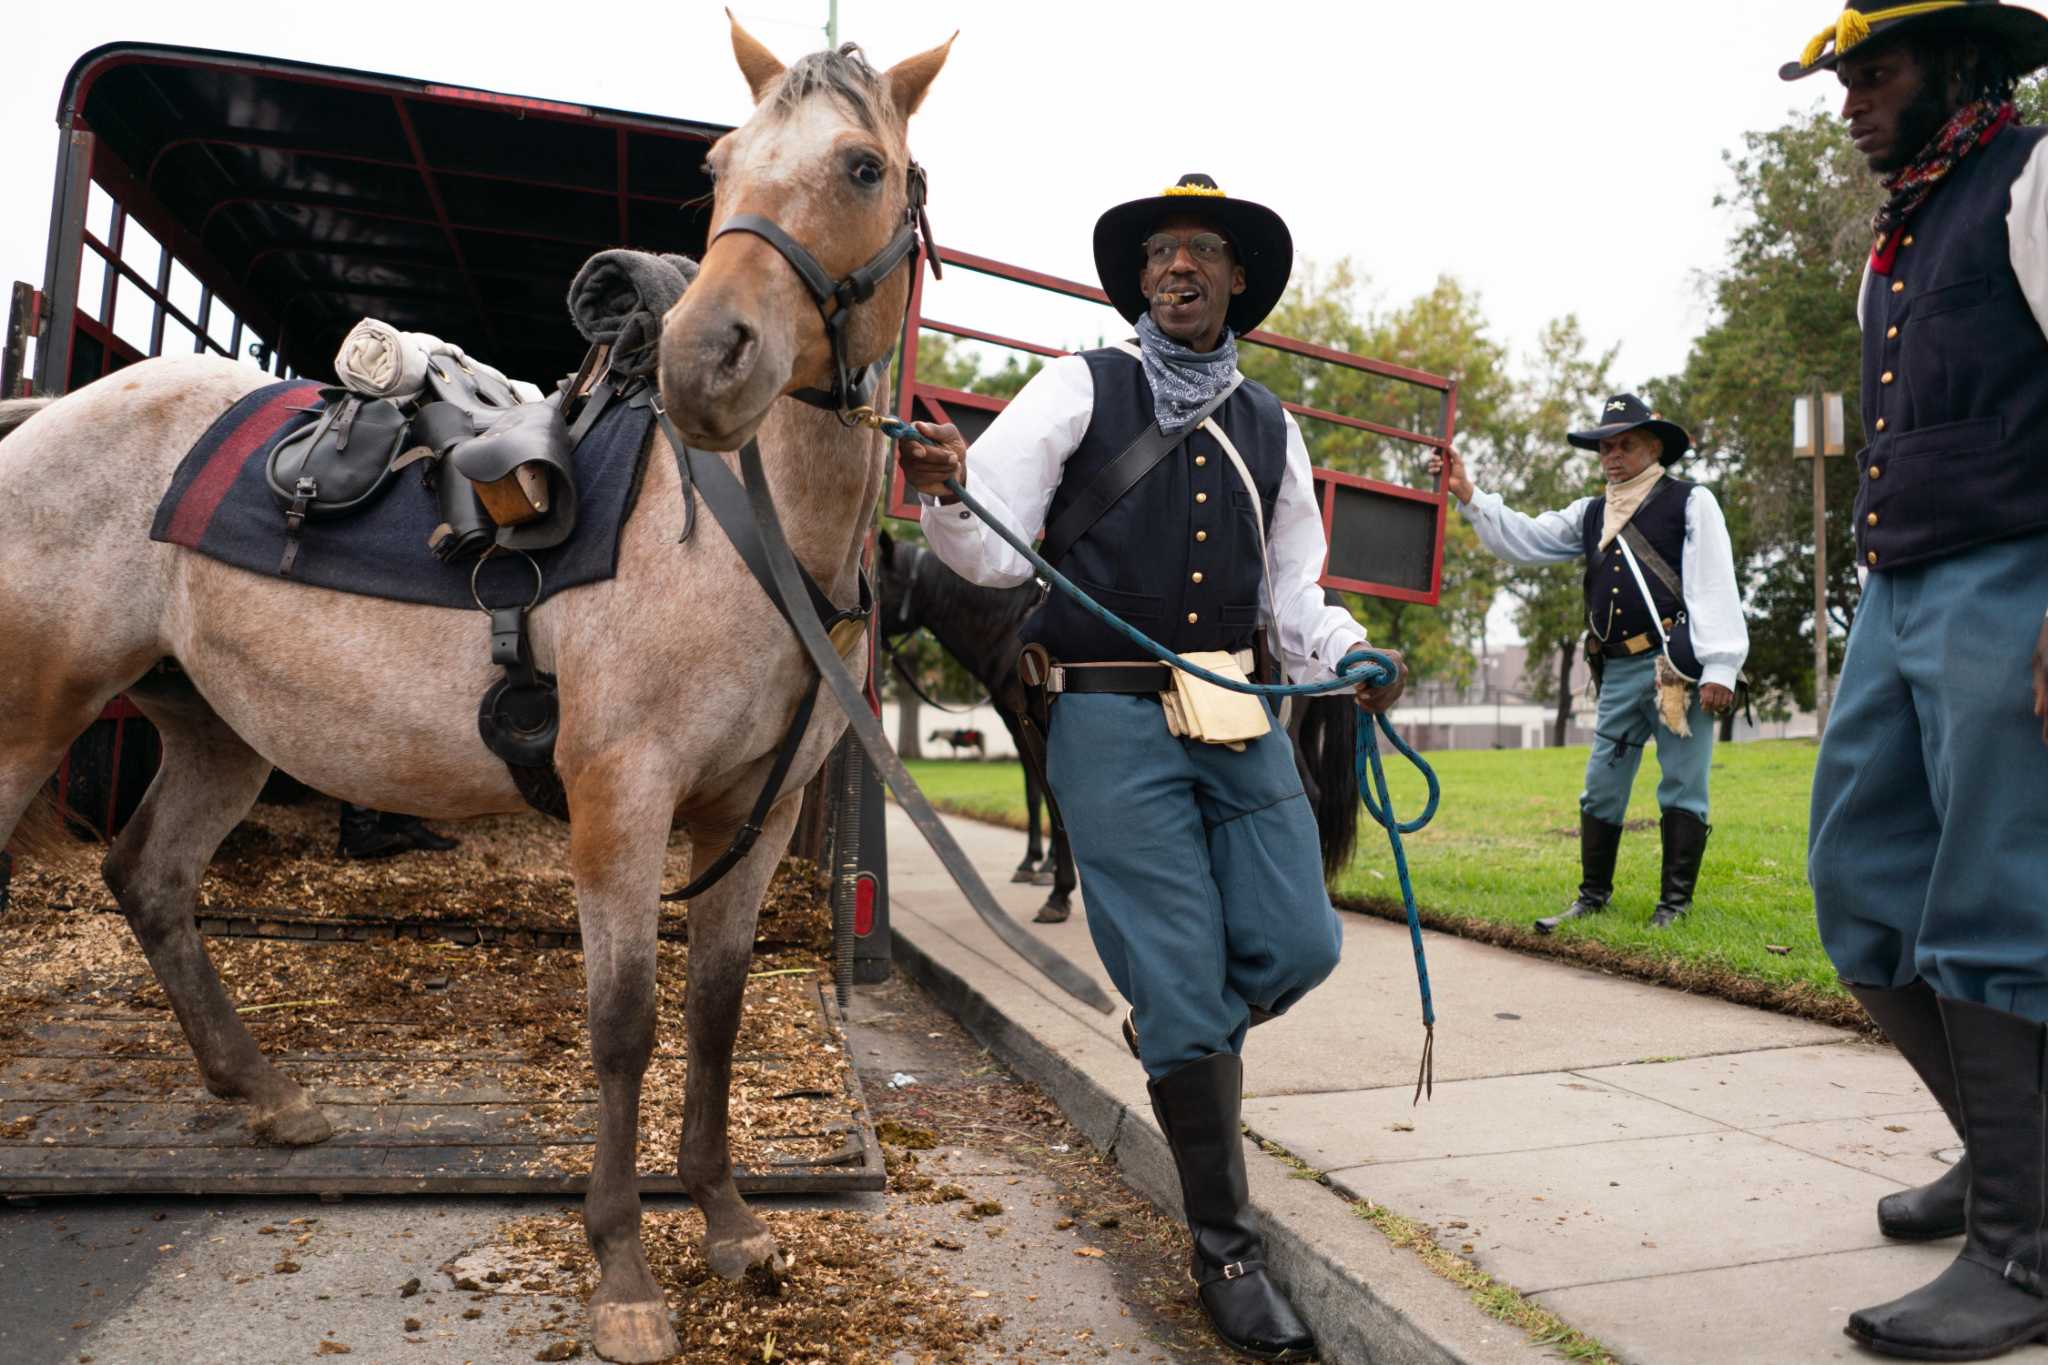 Black Cowboy Association festival draws hundreds in West Oakland